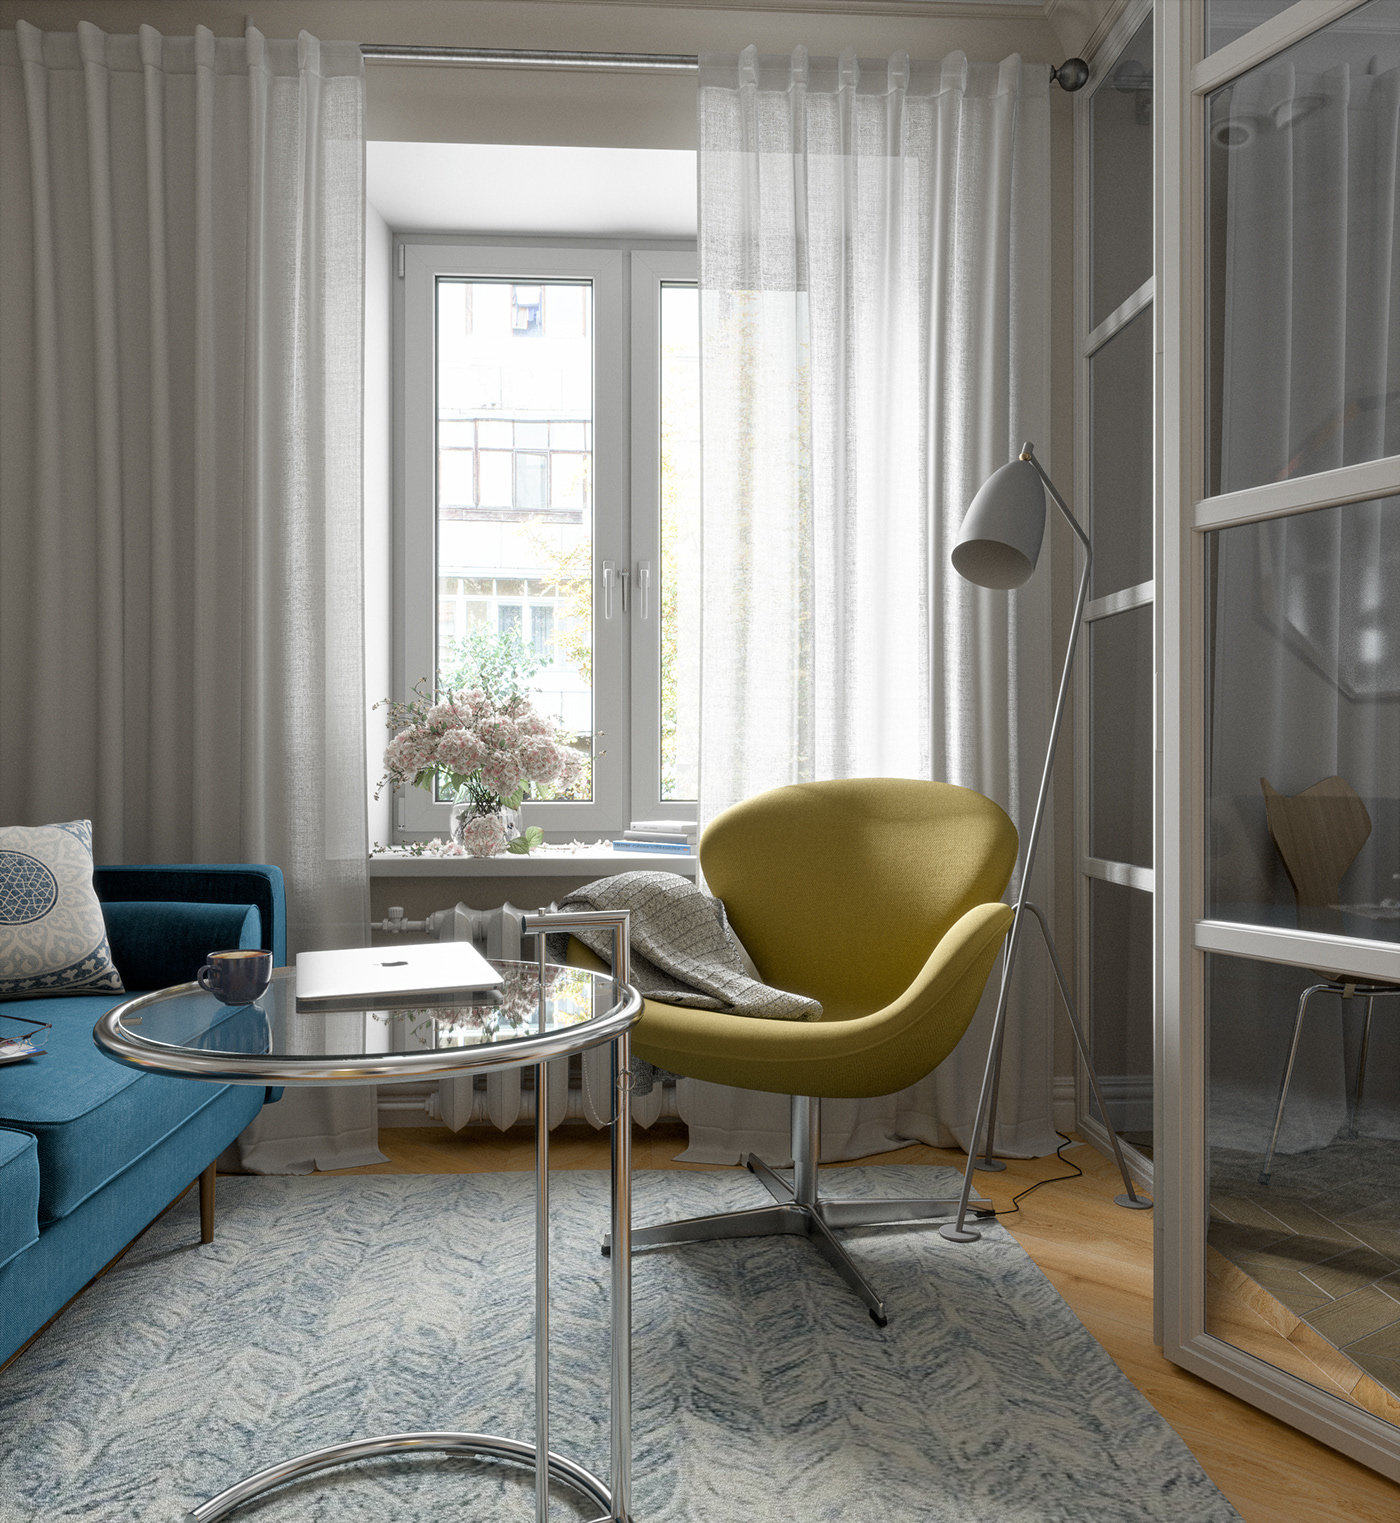 3D visualisation CG Interior viz design home interior cozy mid century